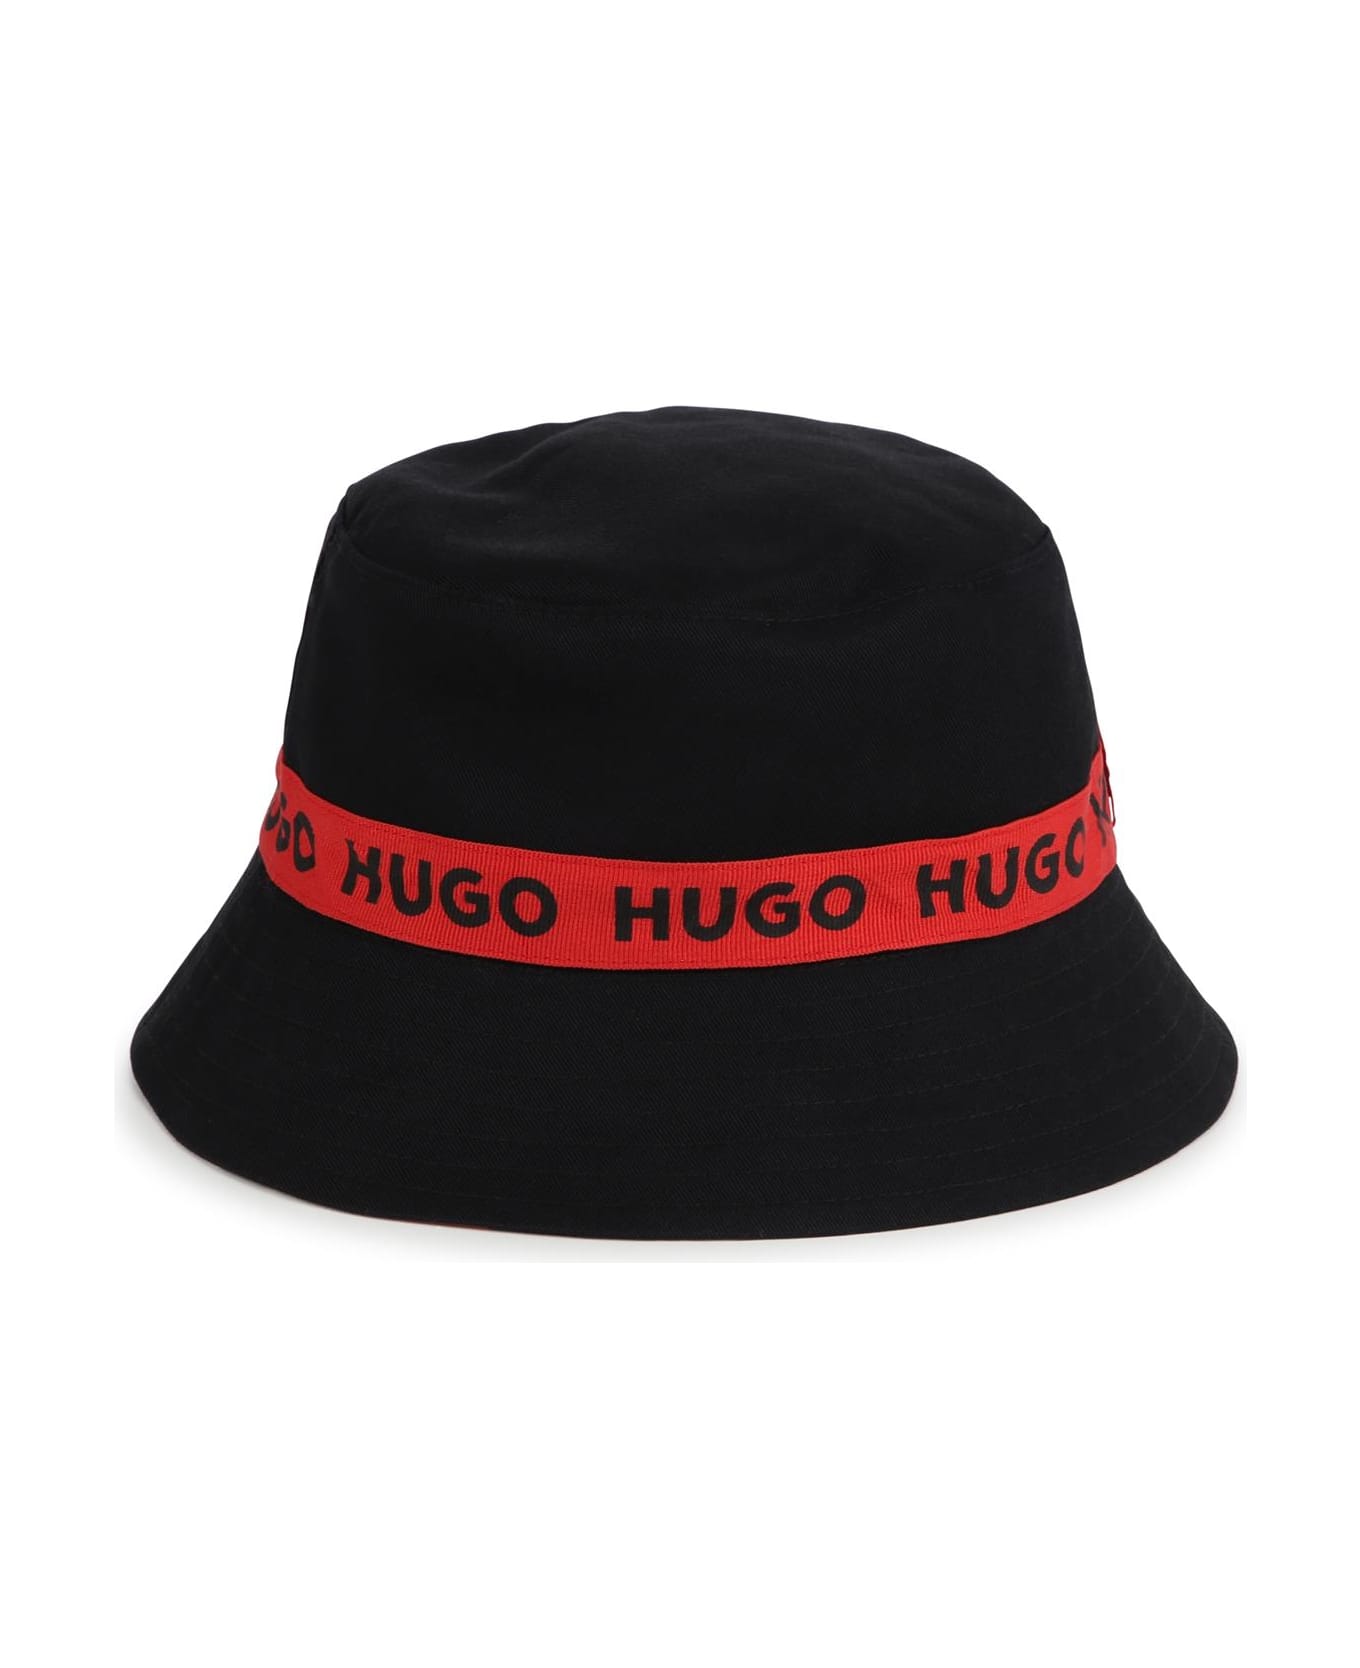 Hugo Boss Bucket Hat With Print - Black